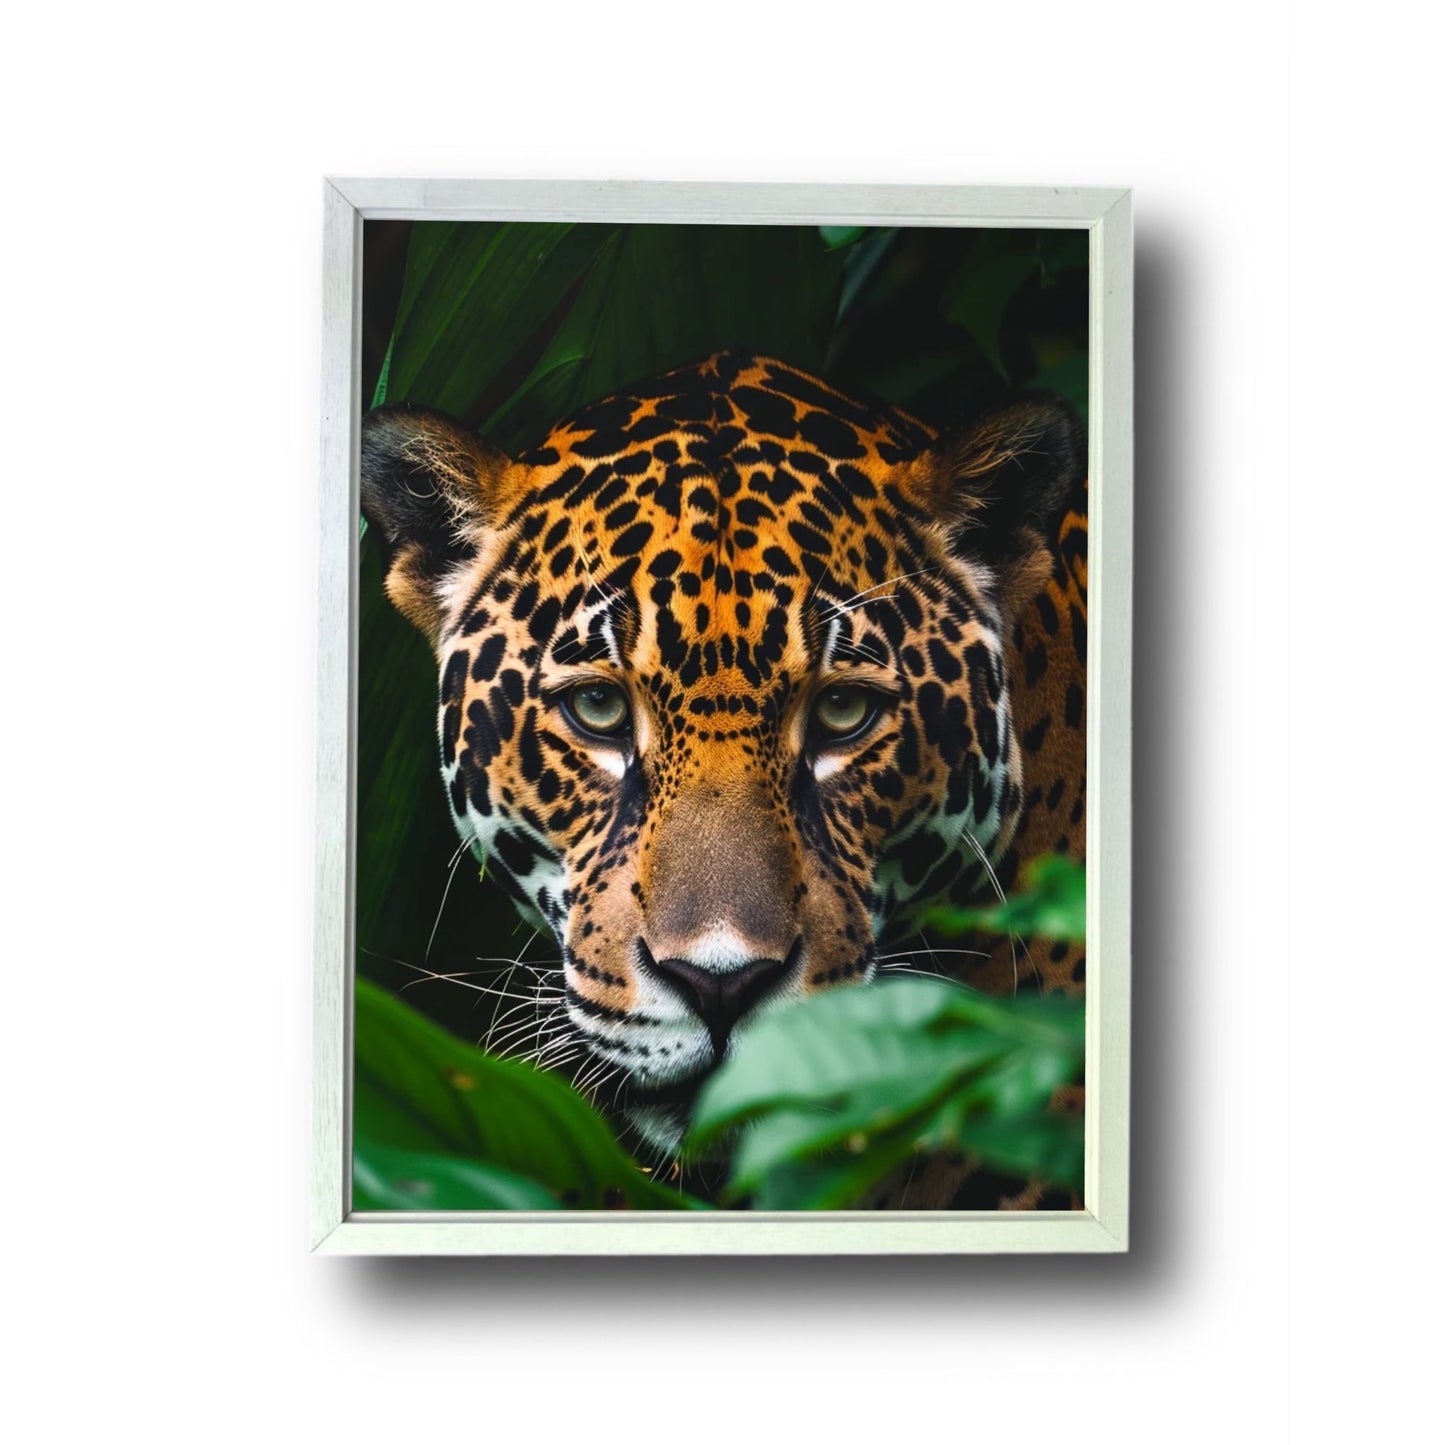 Jaguar in the Jungle 2.0